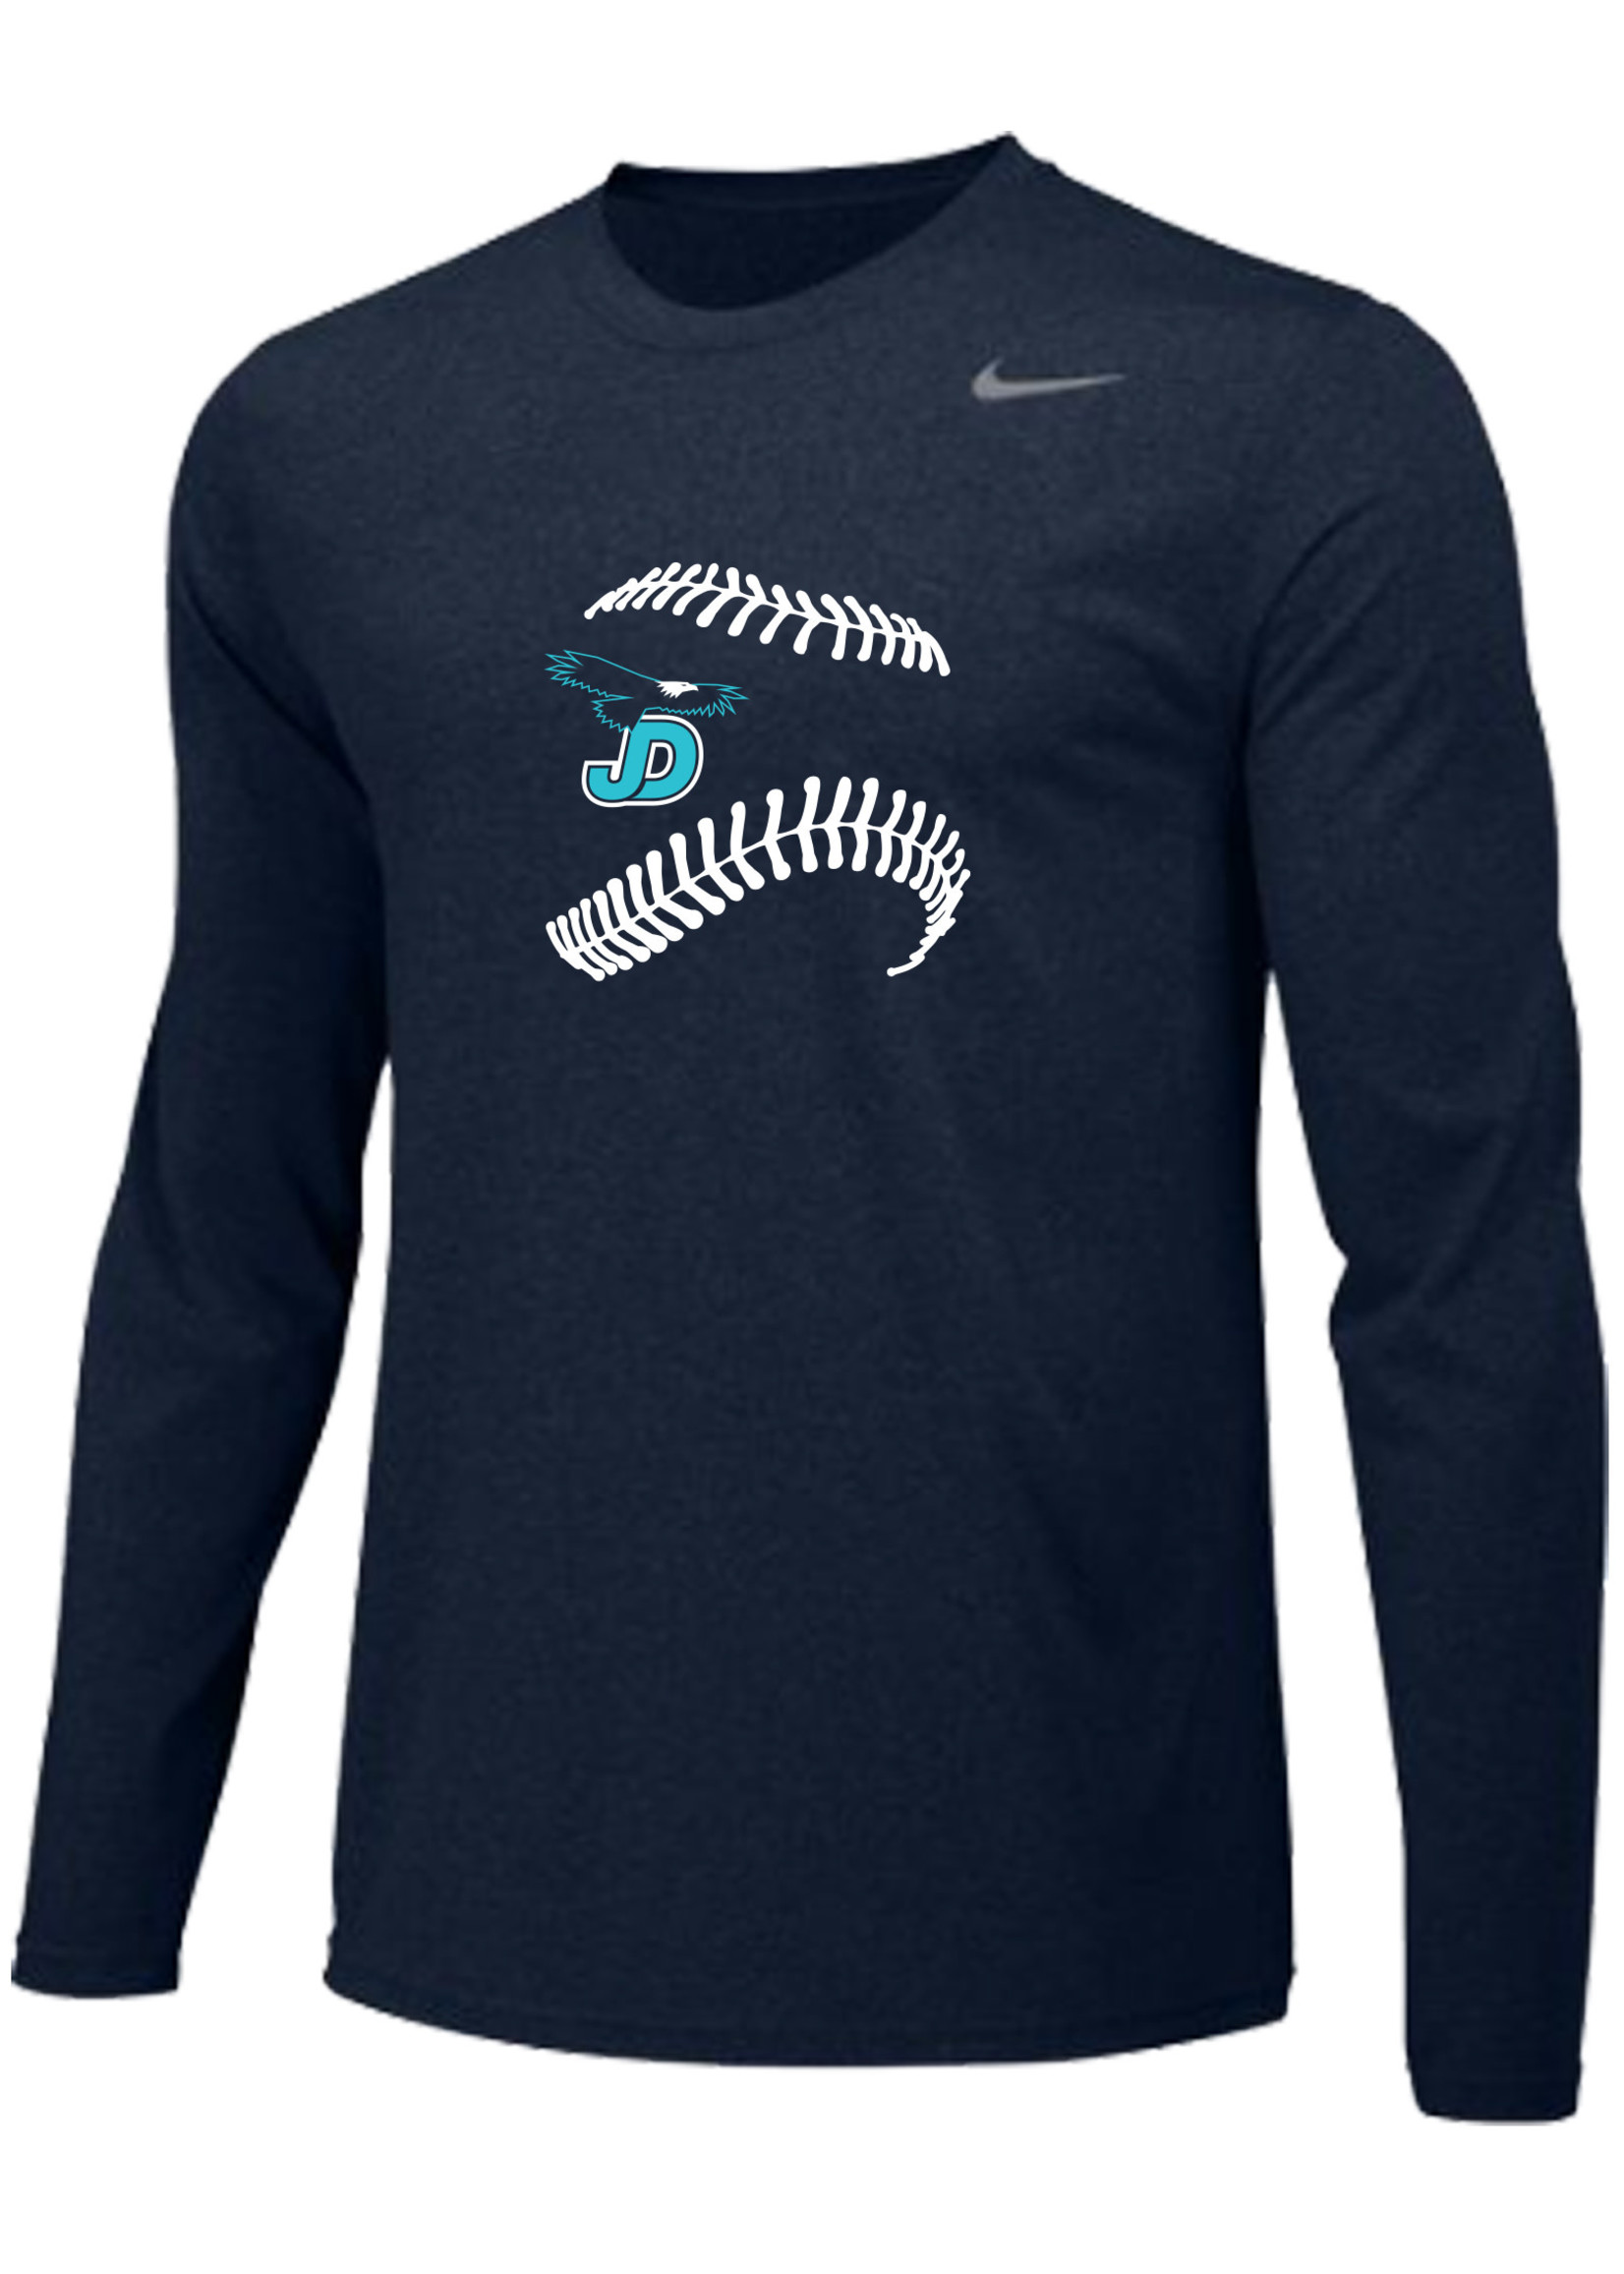 NON-UNIFORM JD Baseball Nike Spirit Long Sleeve T-Shirt, large baseball stitching logo